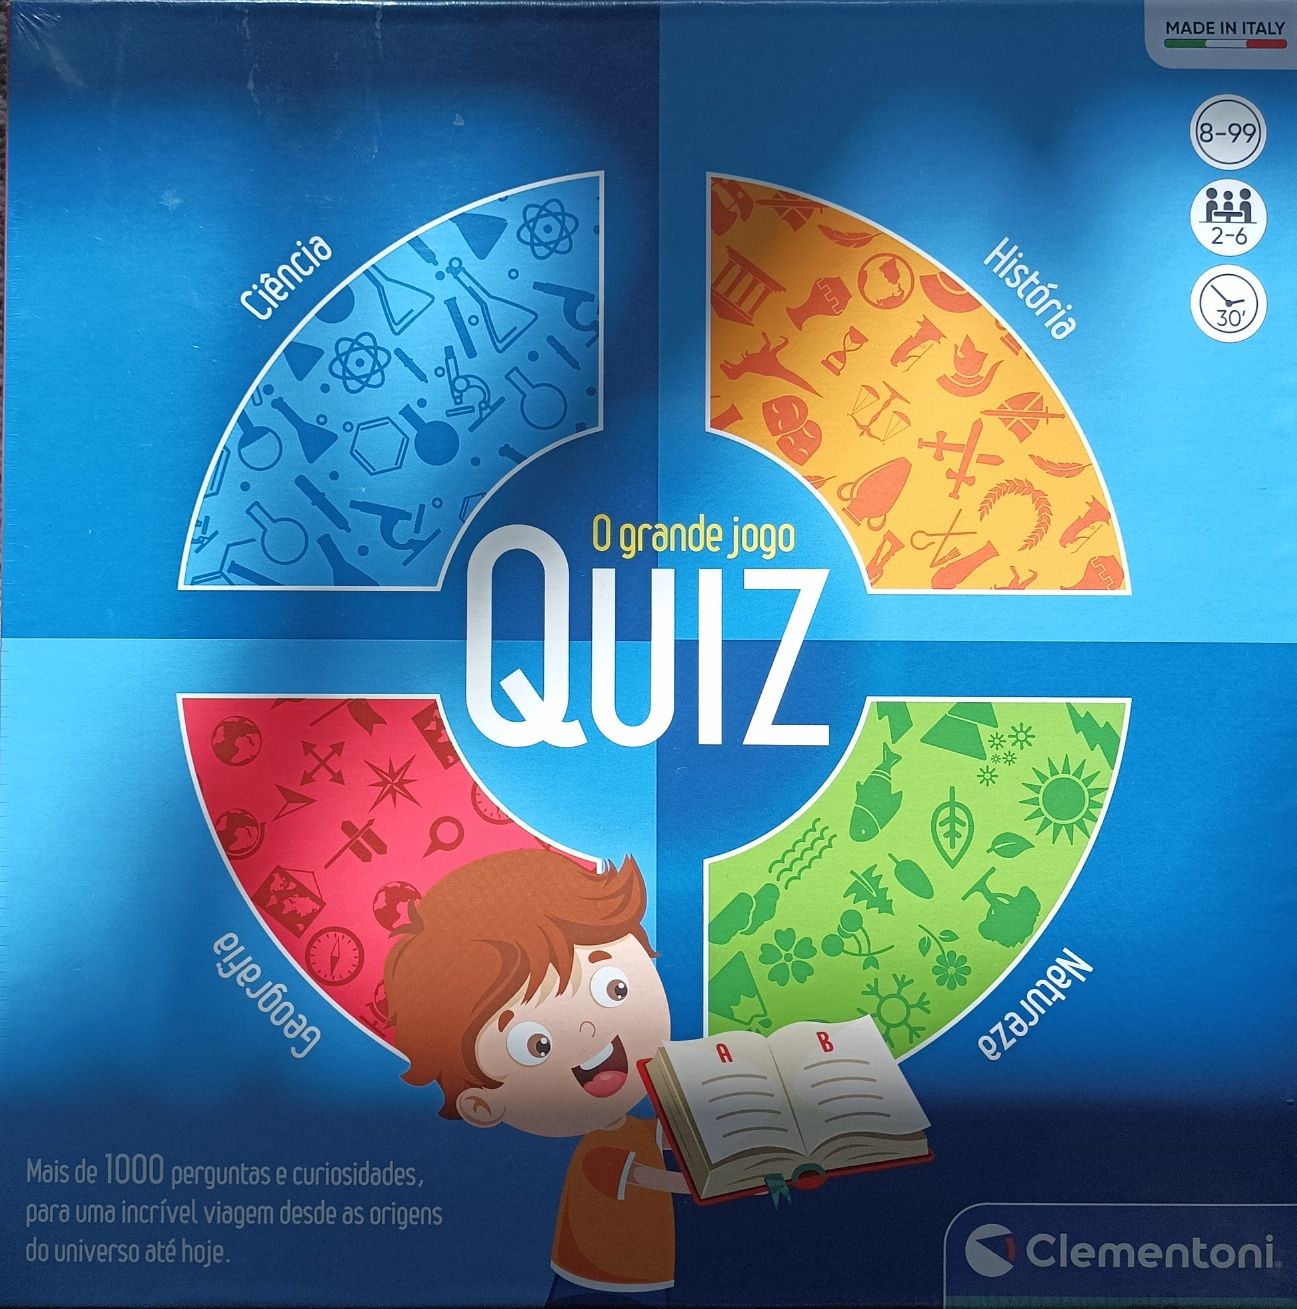 2 Grande jogo Quiz (Geral e Desporto) - Clementoni